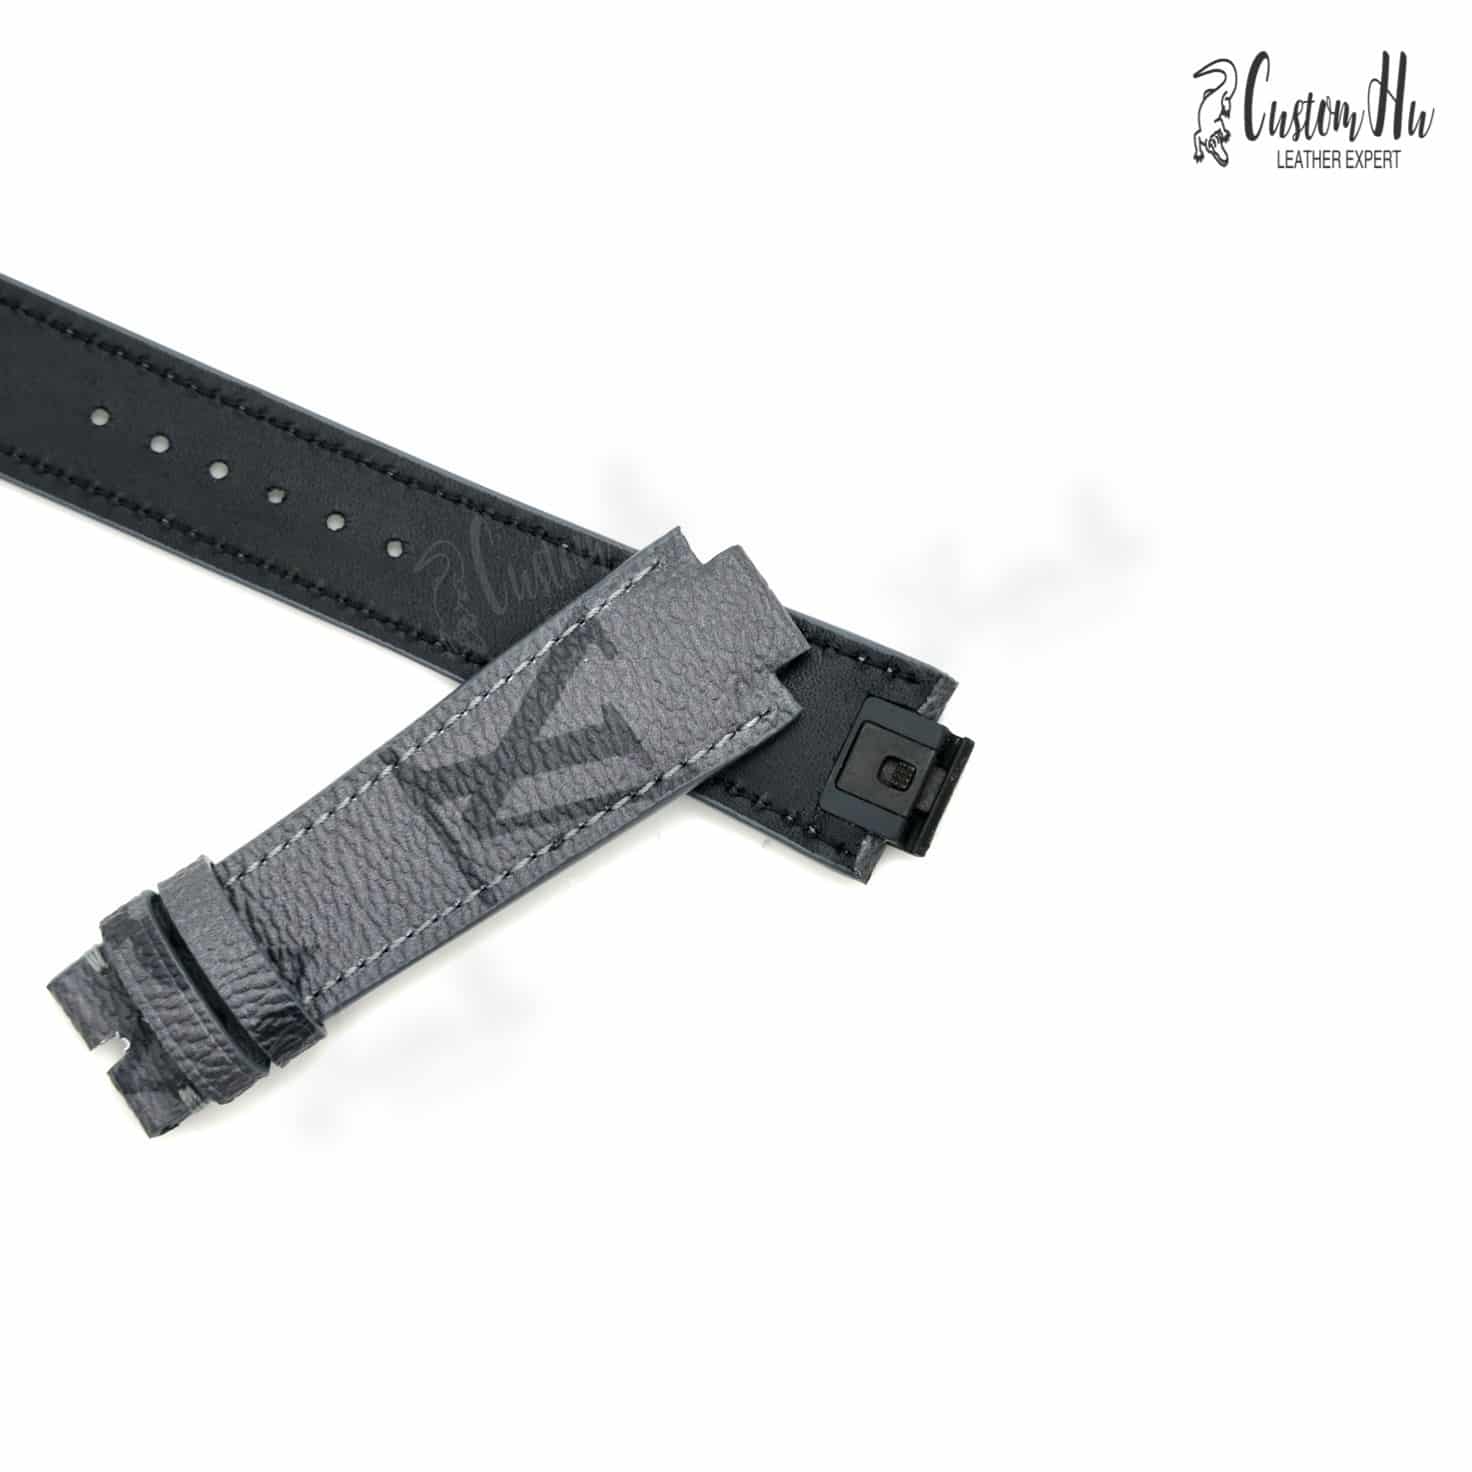 Louis Vuitton Apple Watch Band Black 